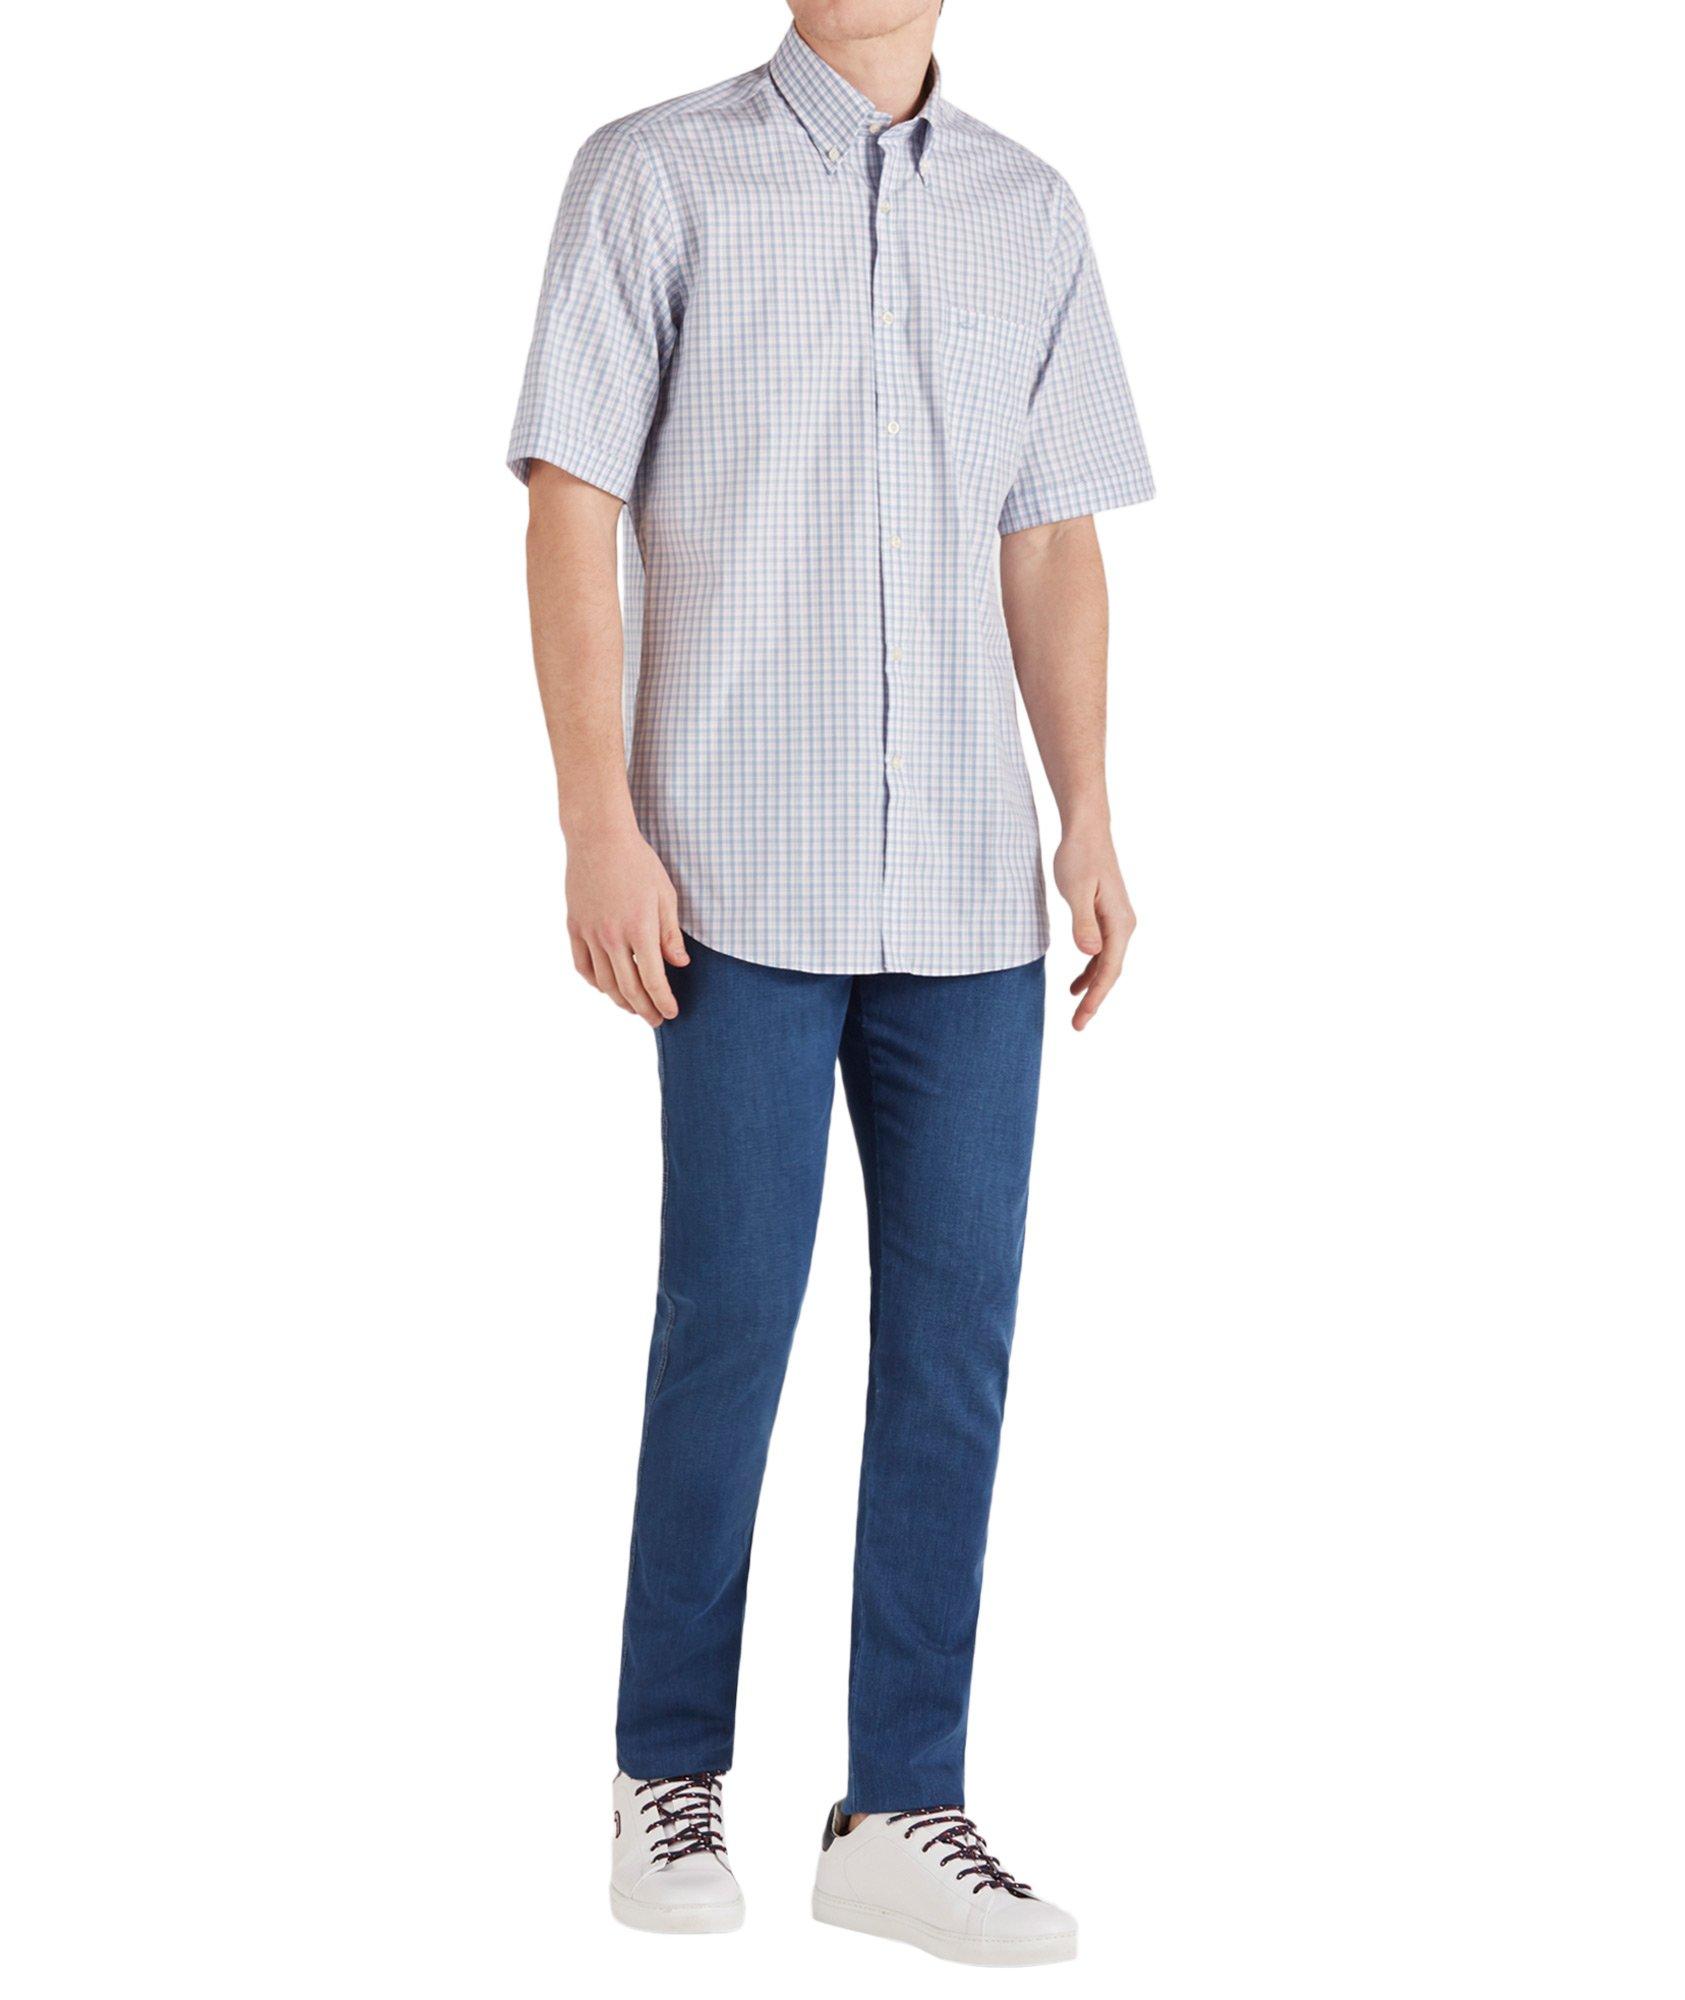 Short-Sleeve Checked Cotton Shirt image 4